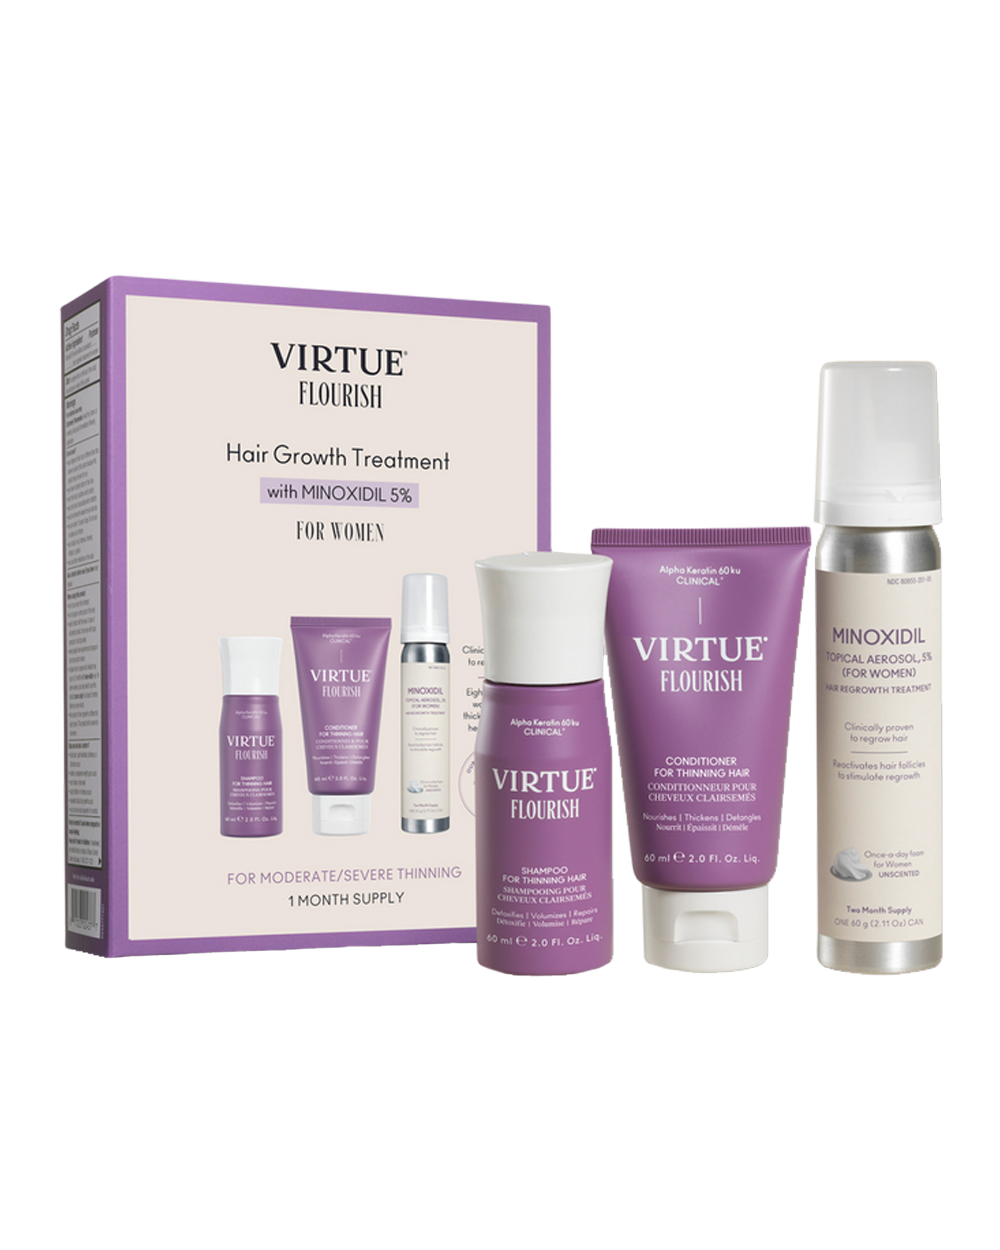 Virtue Hair Growth Treatment with Minoxidil 5%